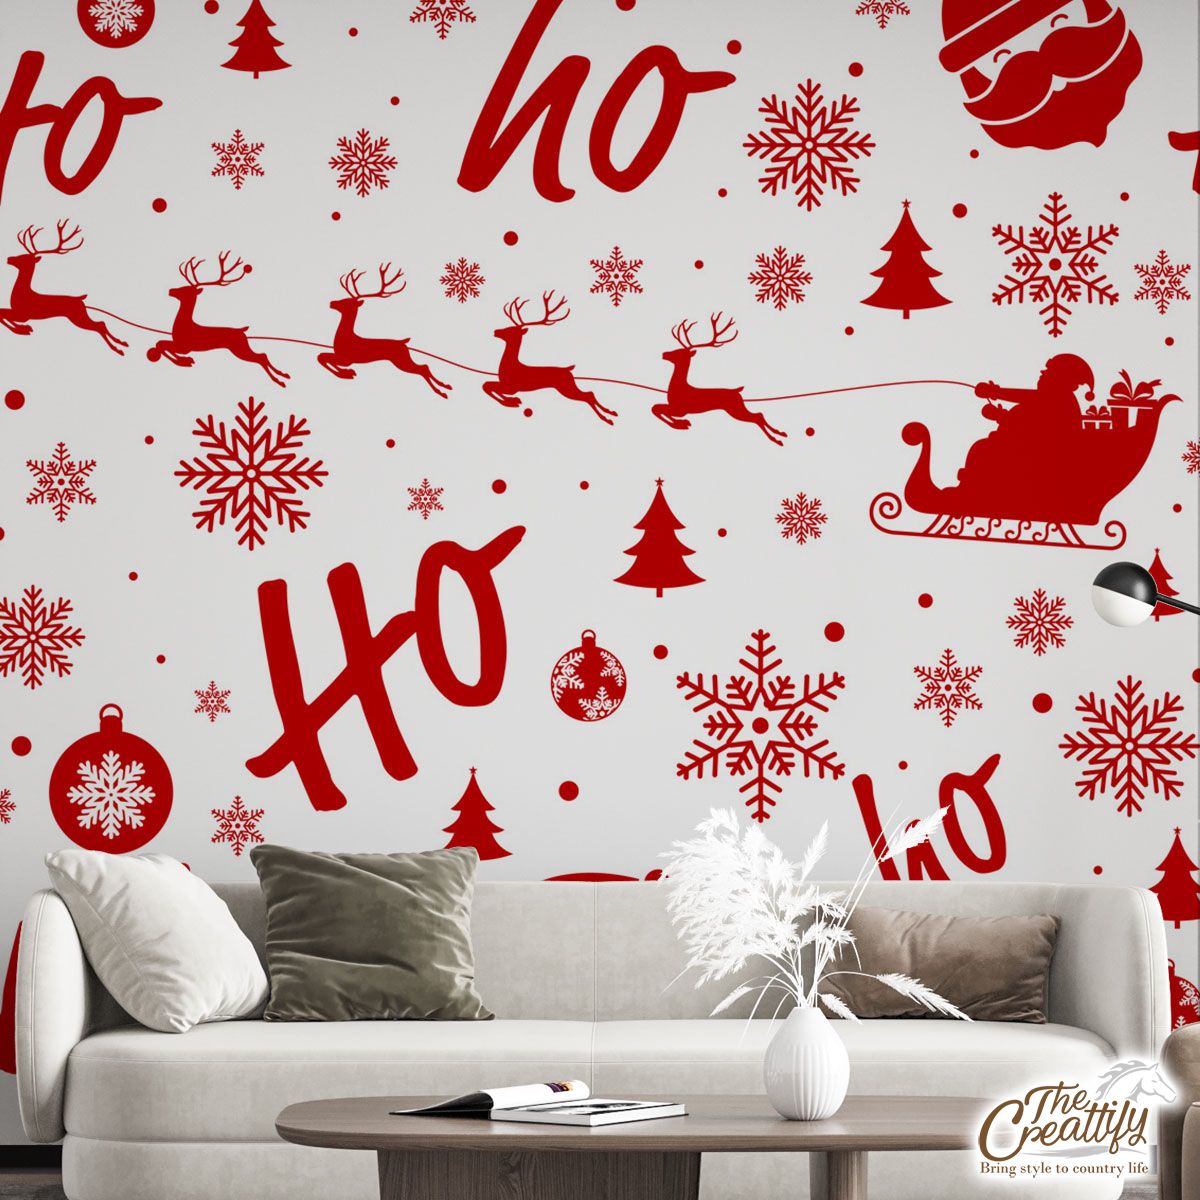 Santa Claus, Santas Reindeer And Christmas Sleigh On The Snowflake Background Wall Mural